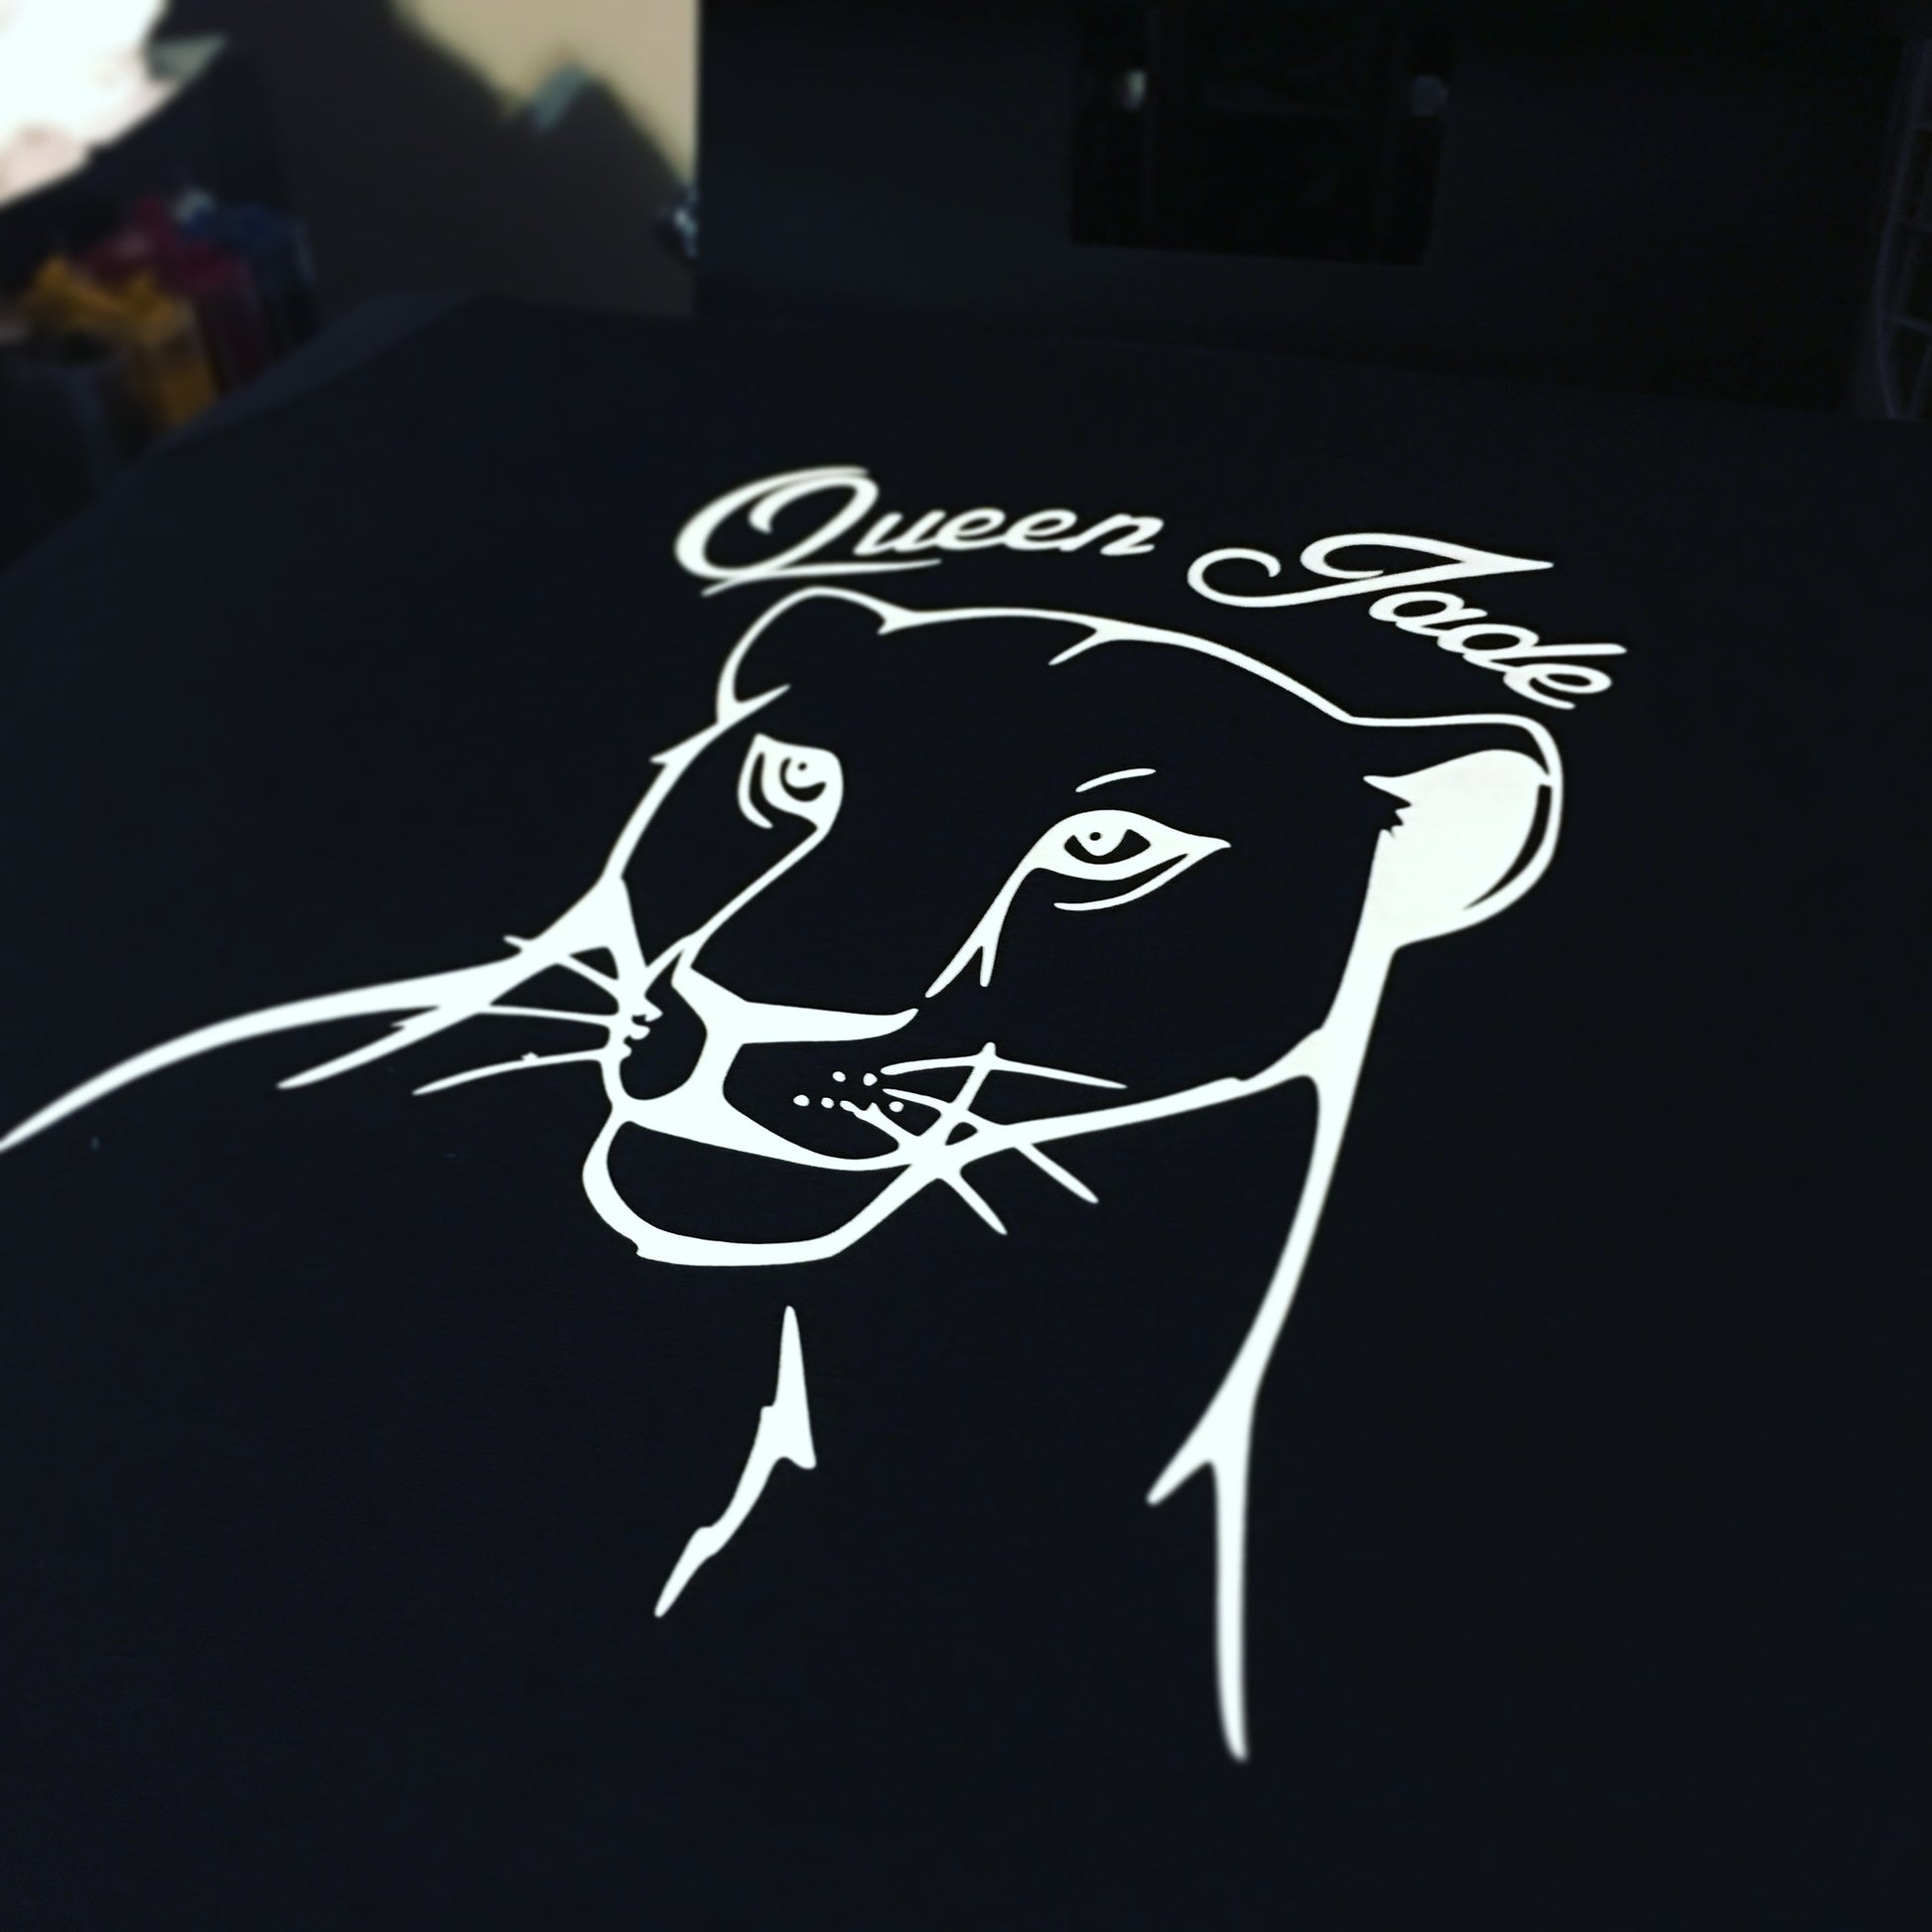 Family - King,Queen T-Shirt - 550strong